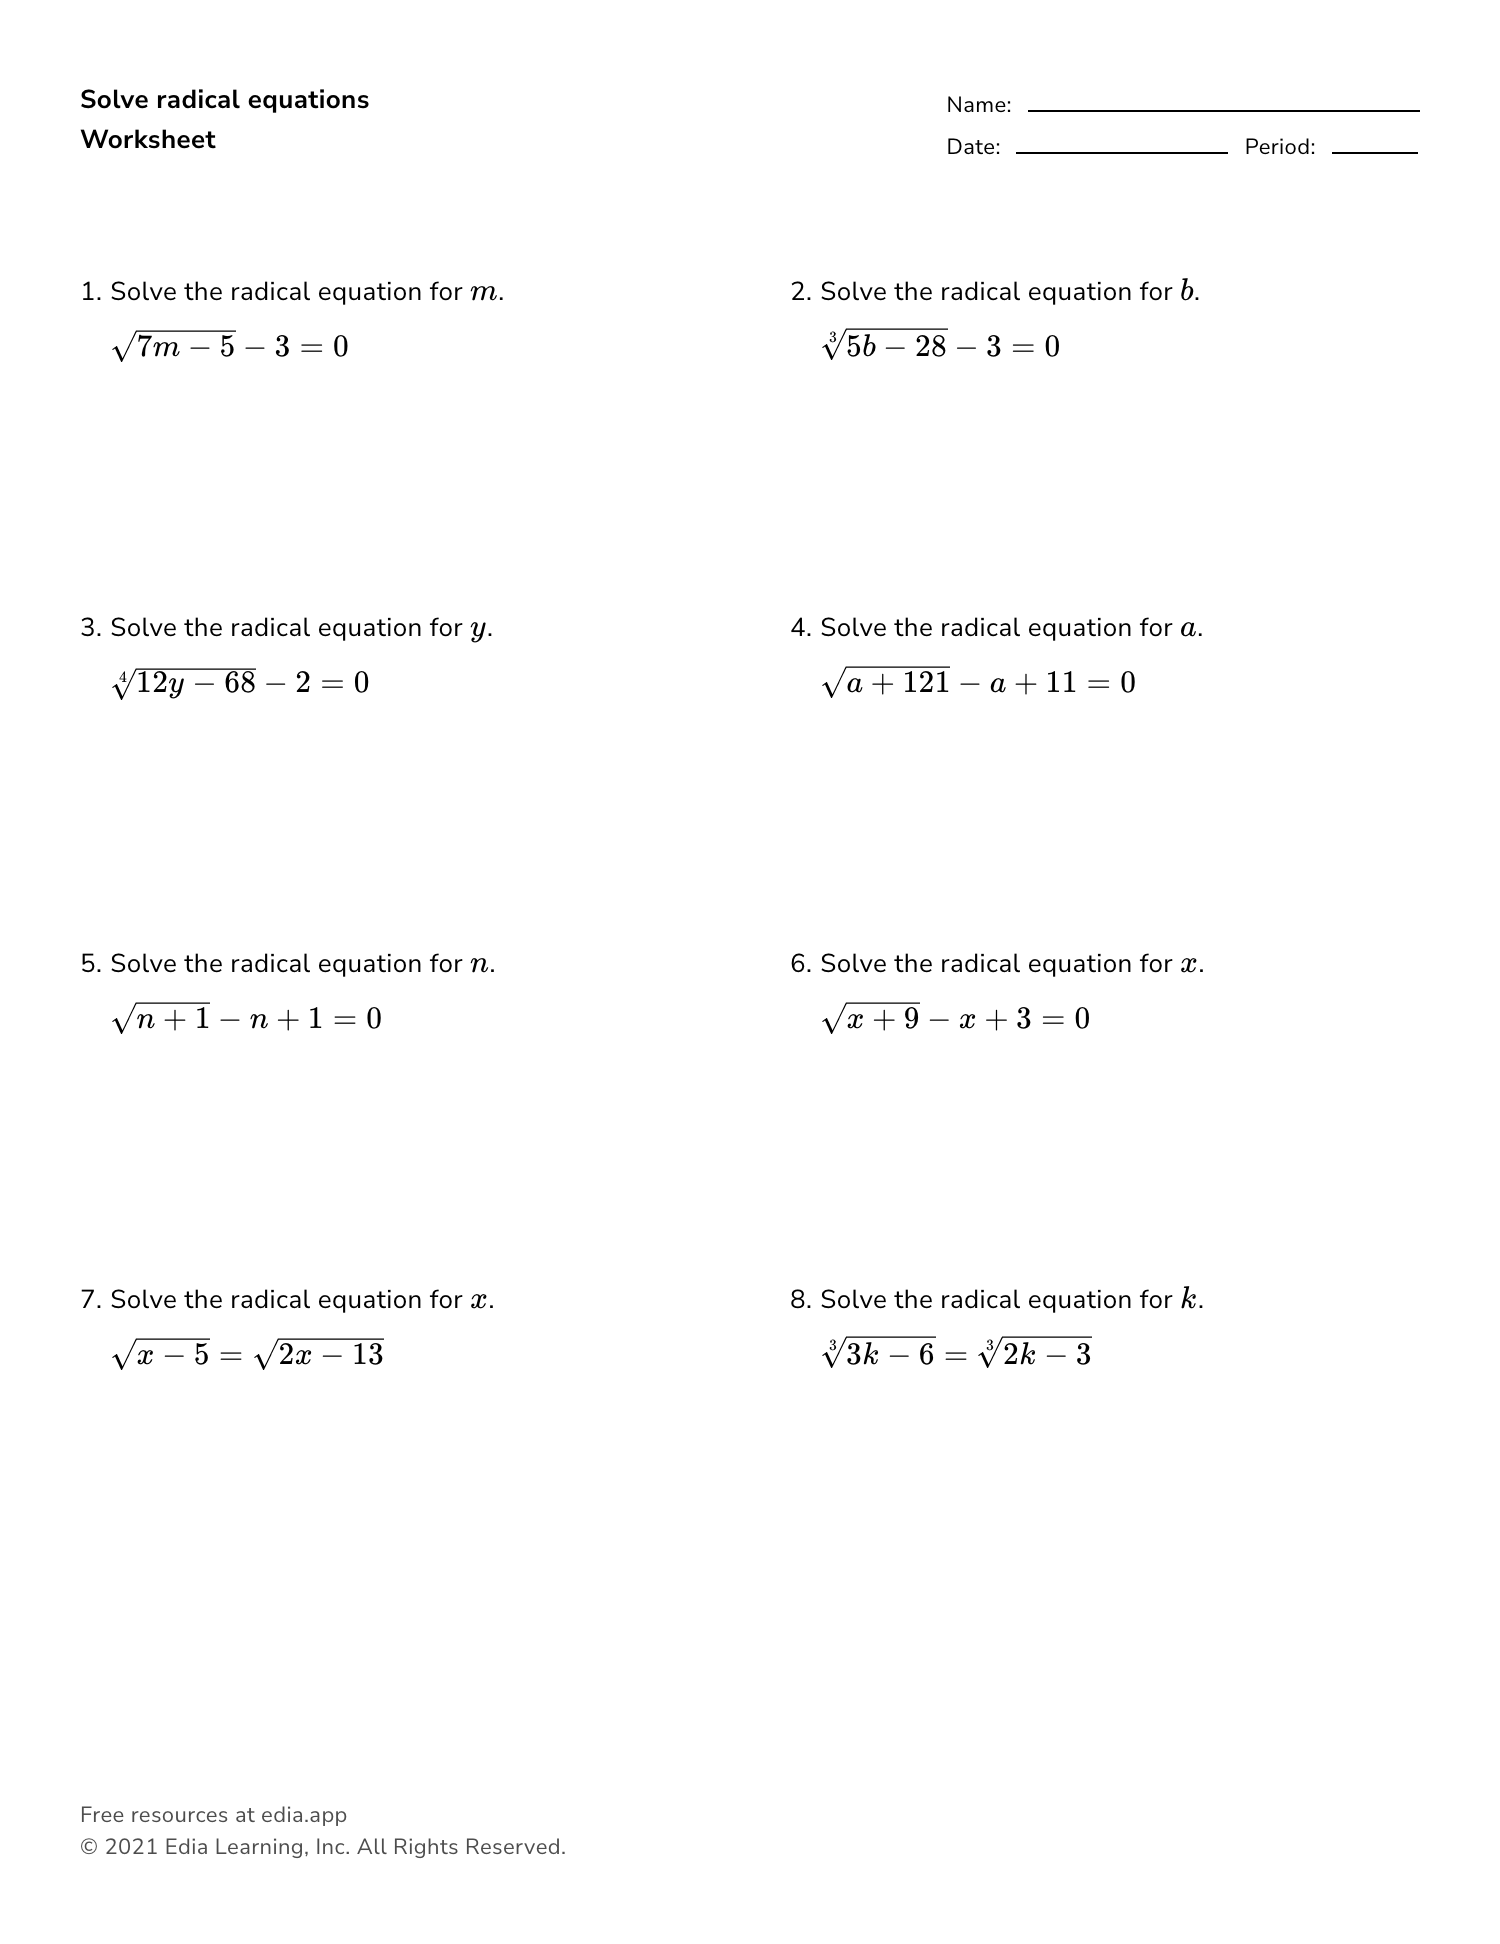 Solve Radical Equations - Worksheet Within Solve Radical Equations Worksheet